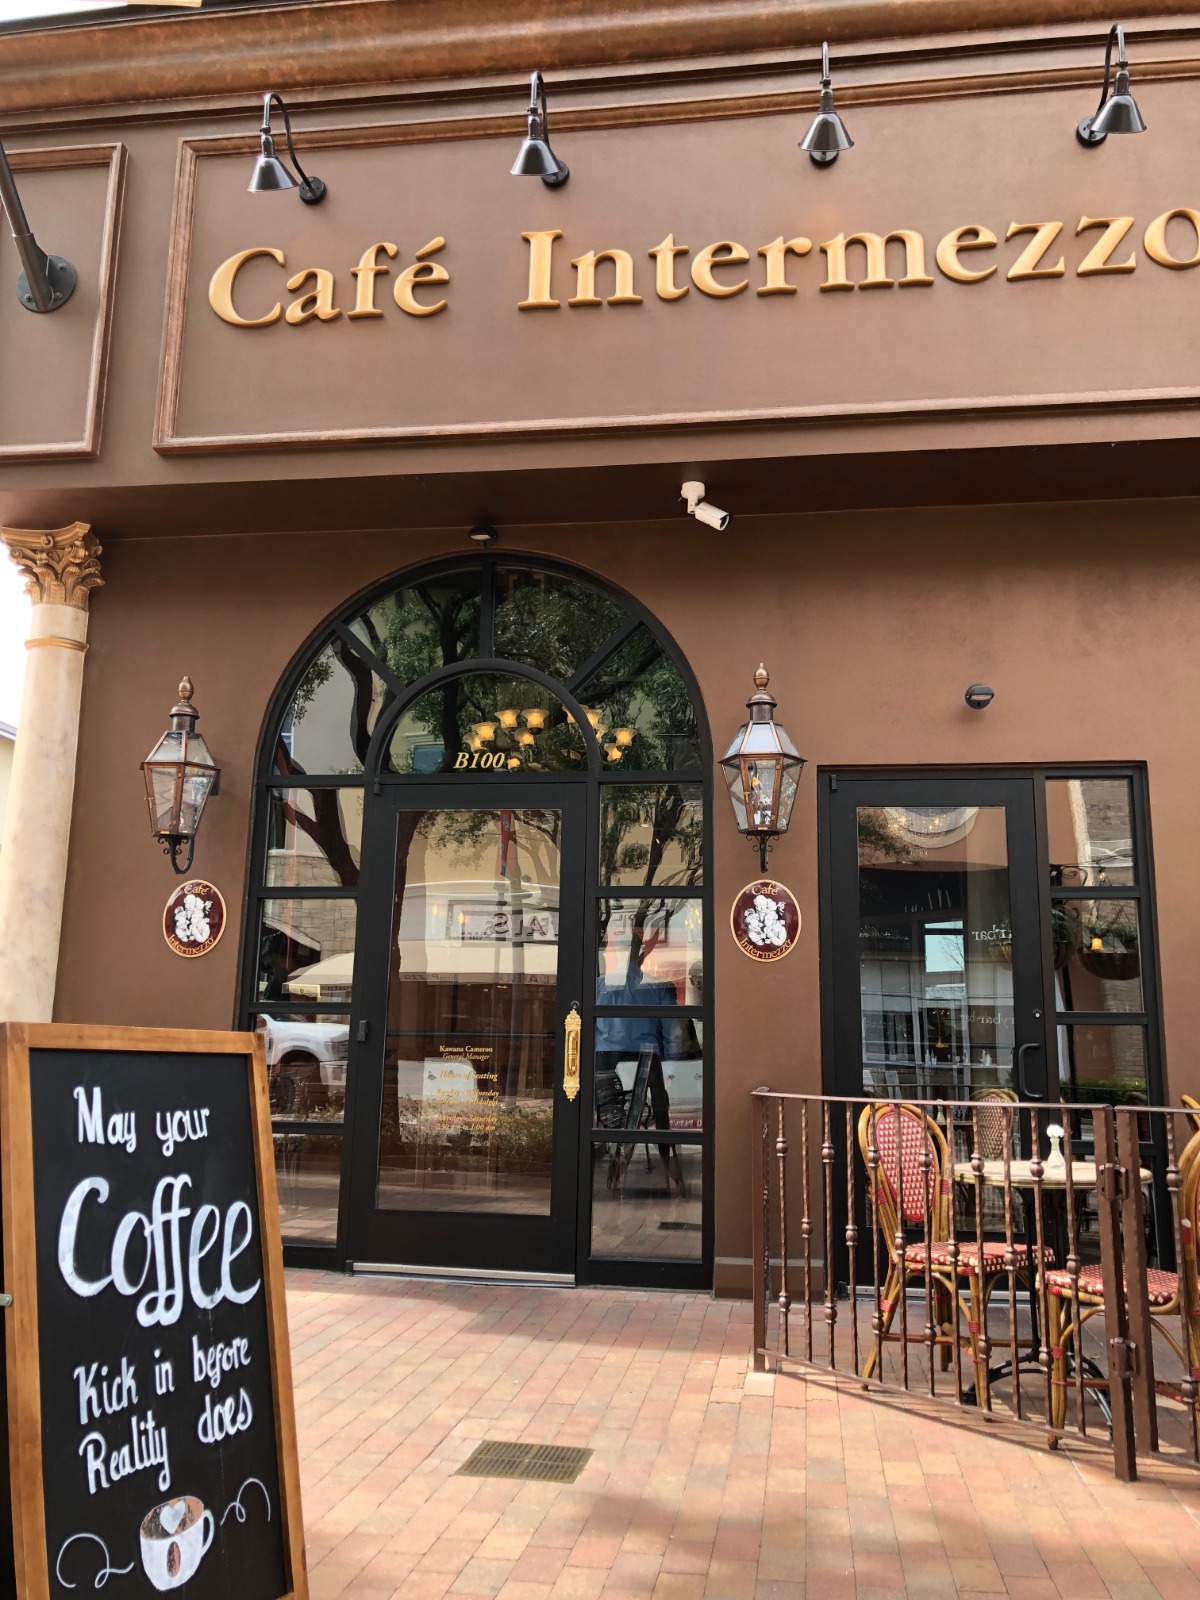 Café Intermezzo Old Fashion European Coffeehouse - Cafe Intermezzo